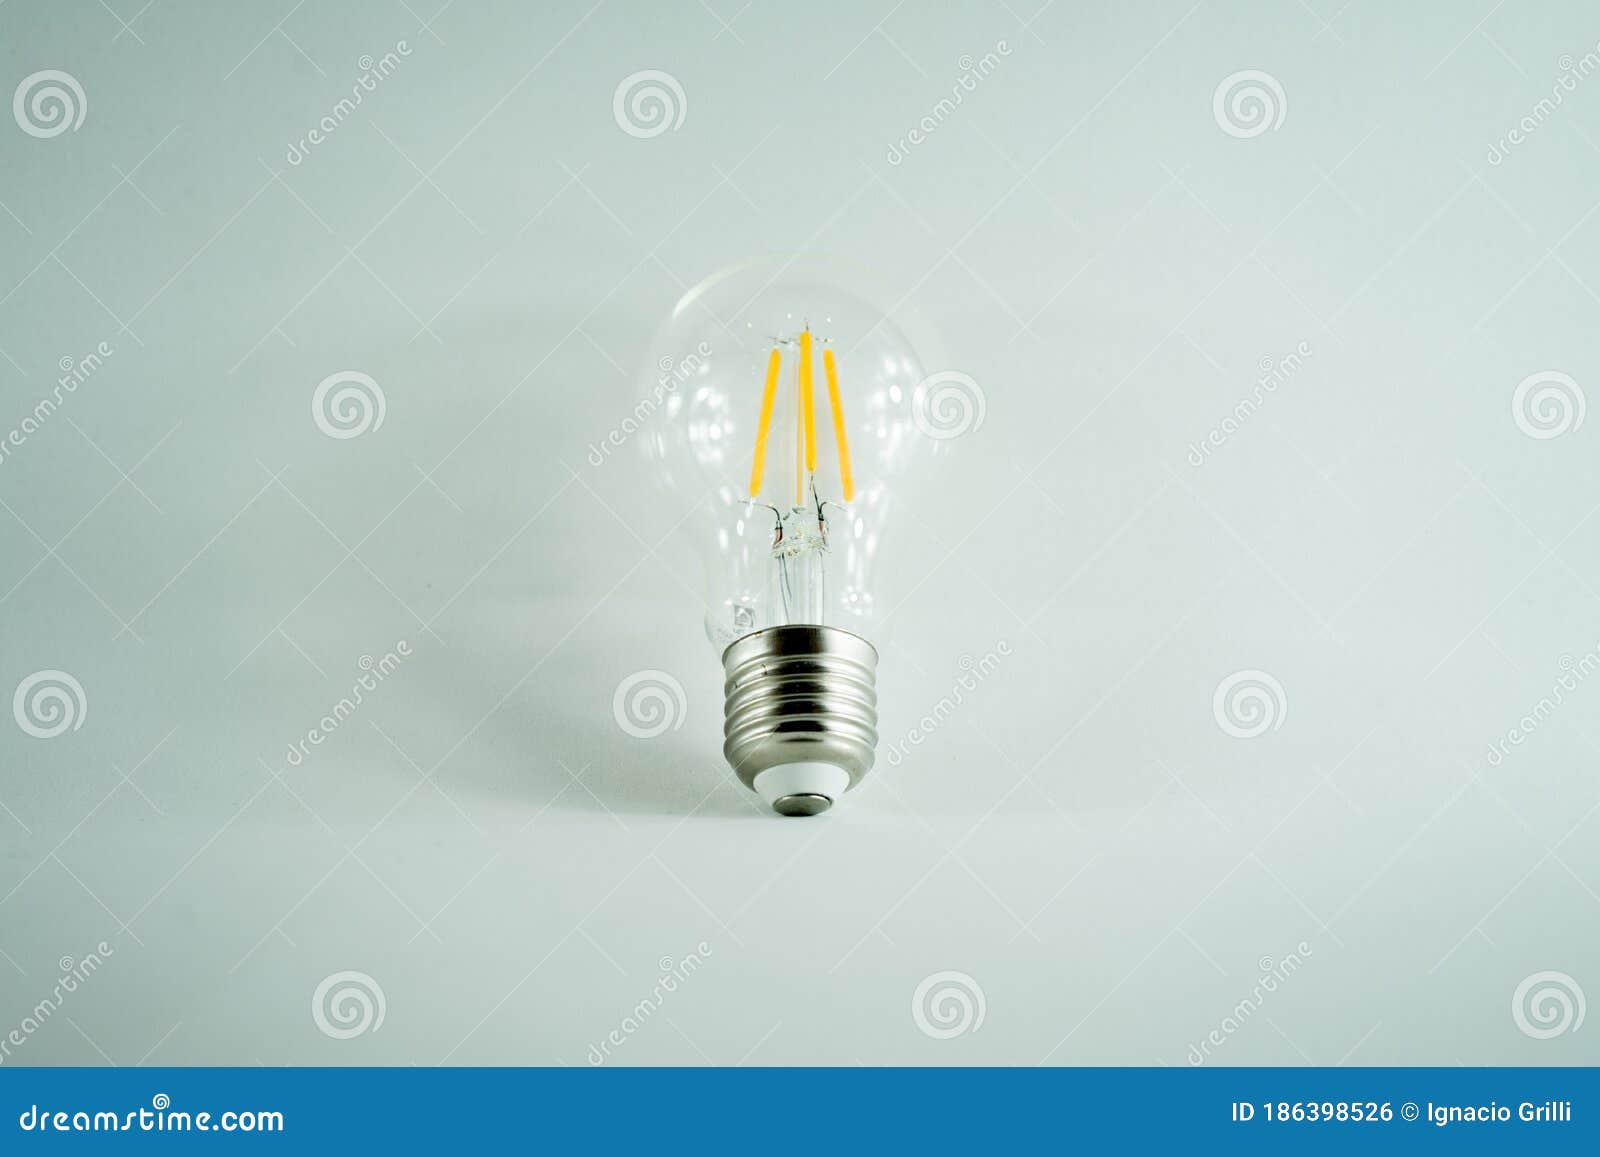 conceptual light bulb in minimalist white background